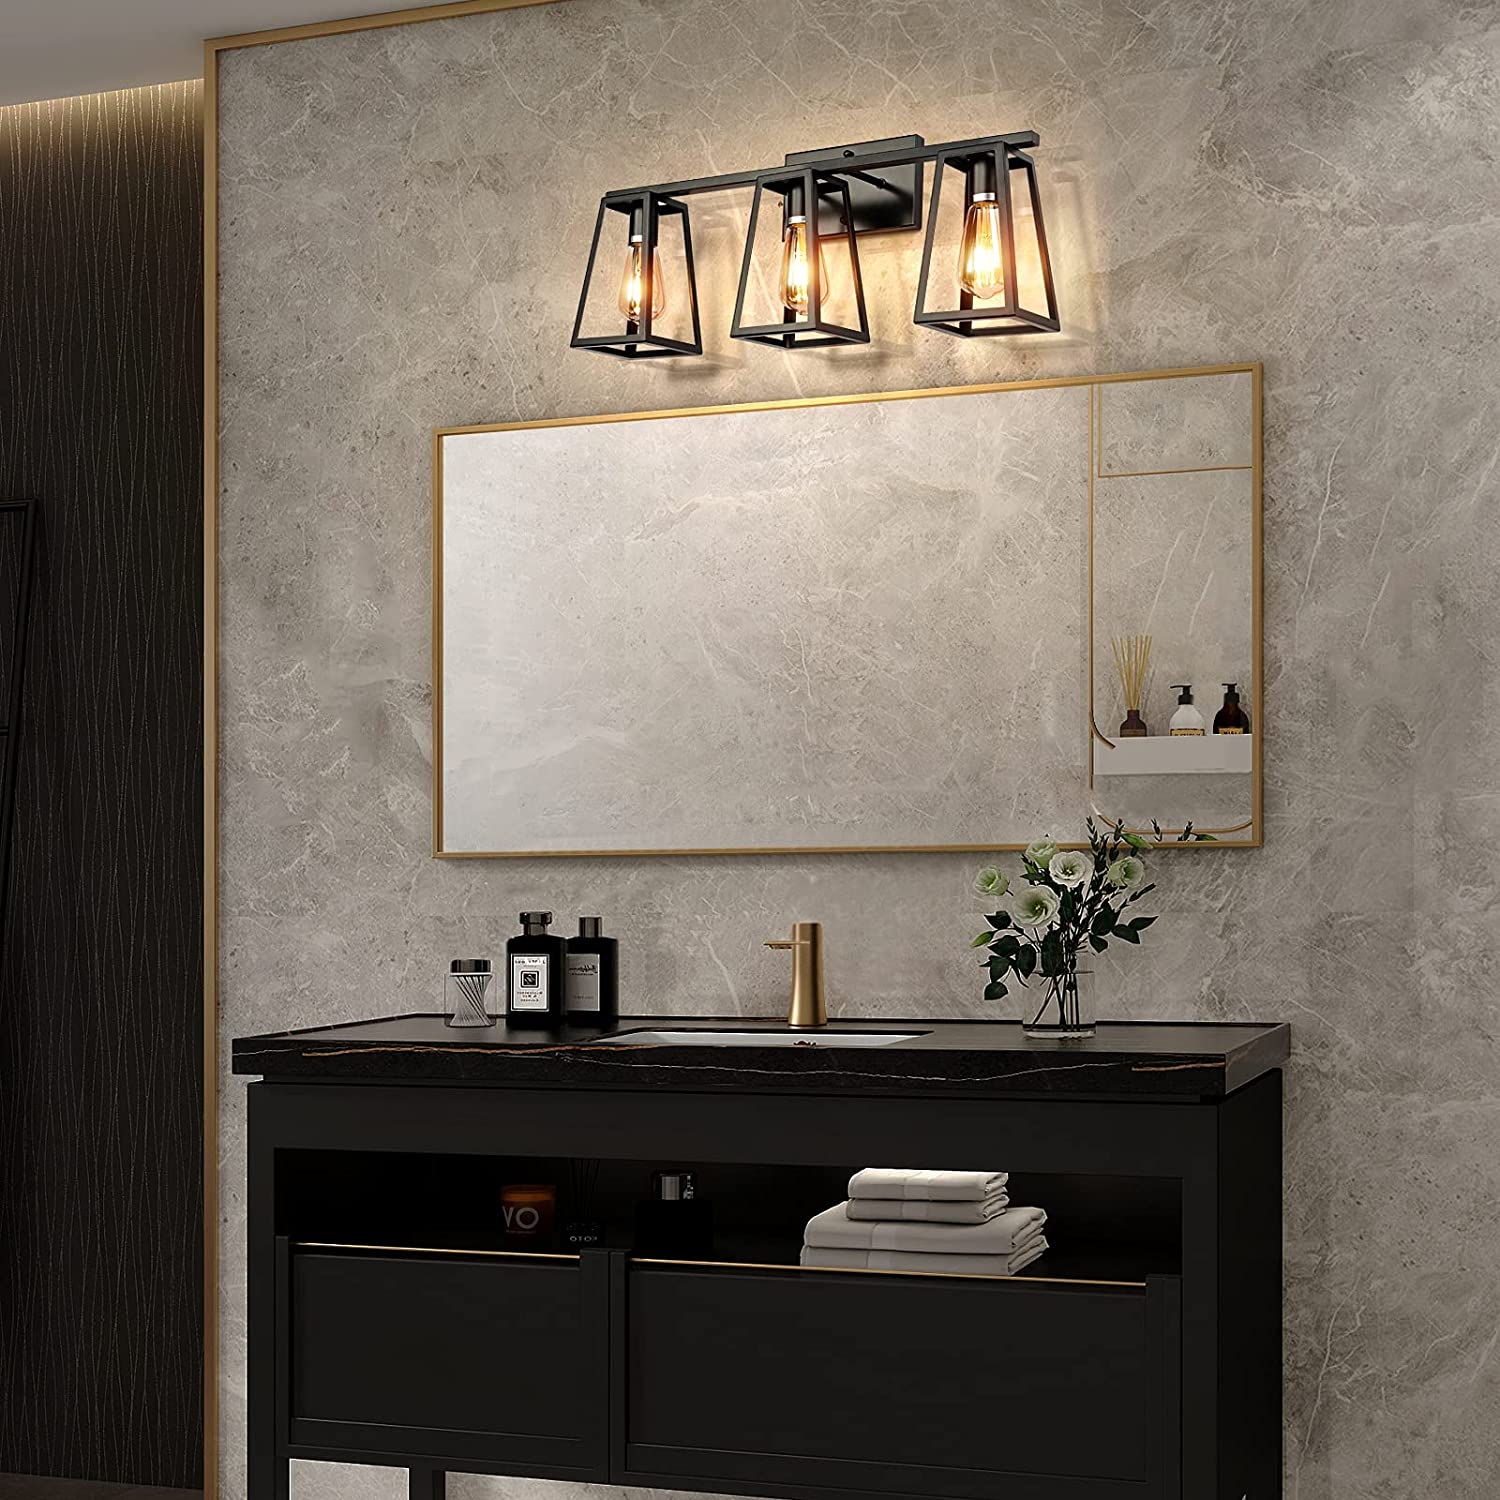 3 light wall vanity lighting modern black wall light fixture